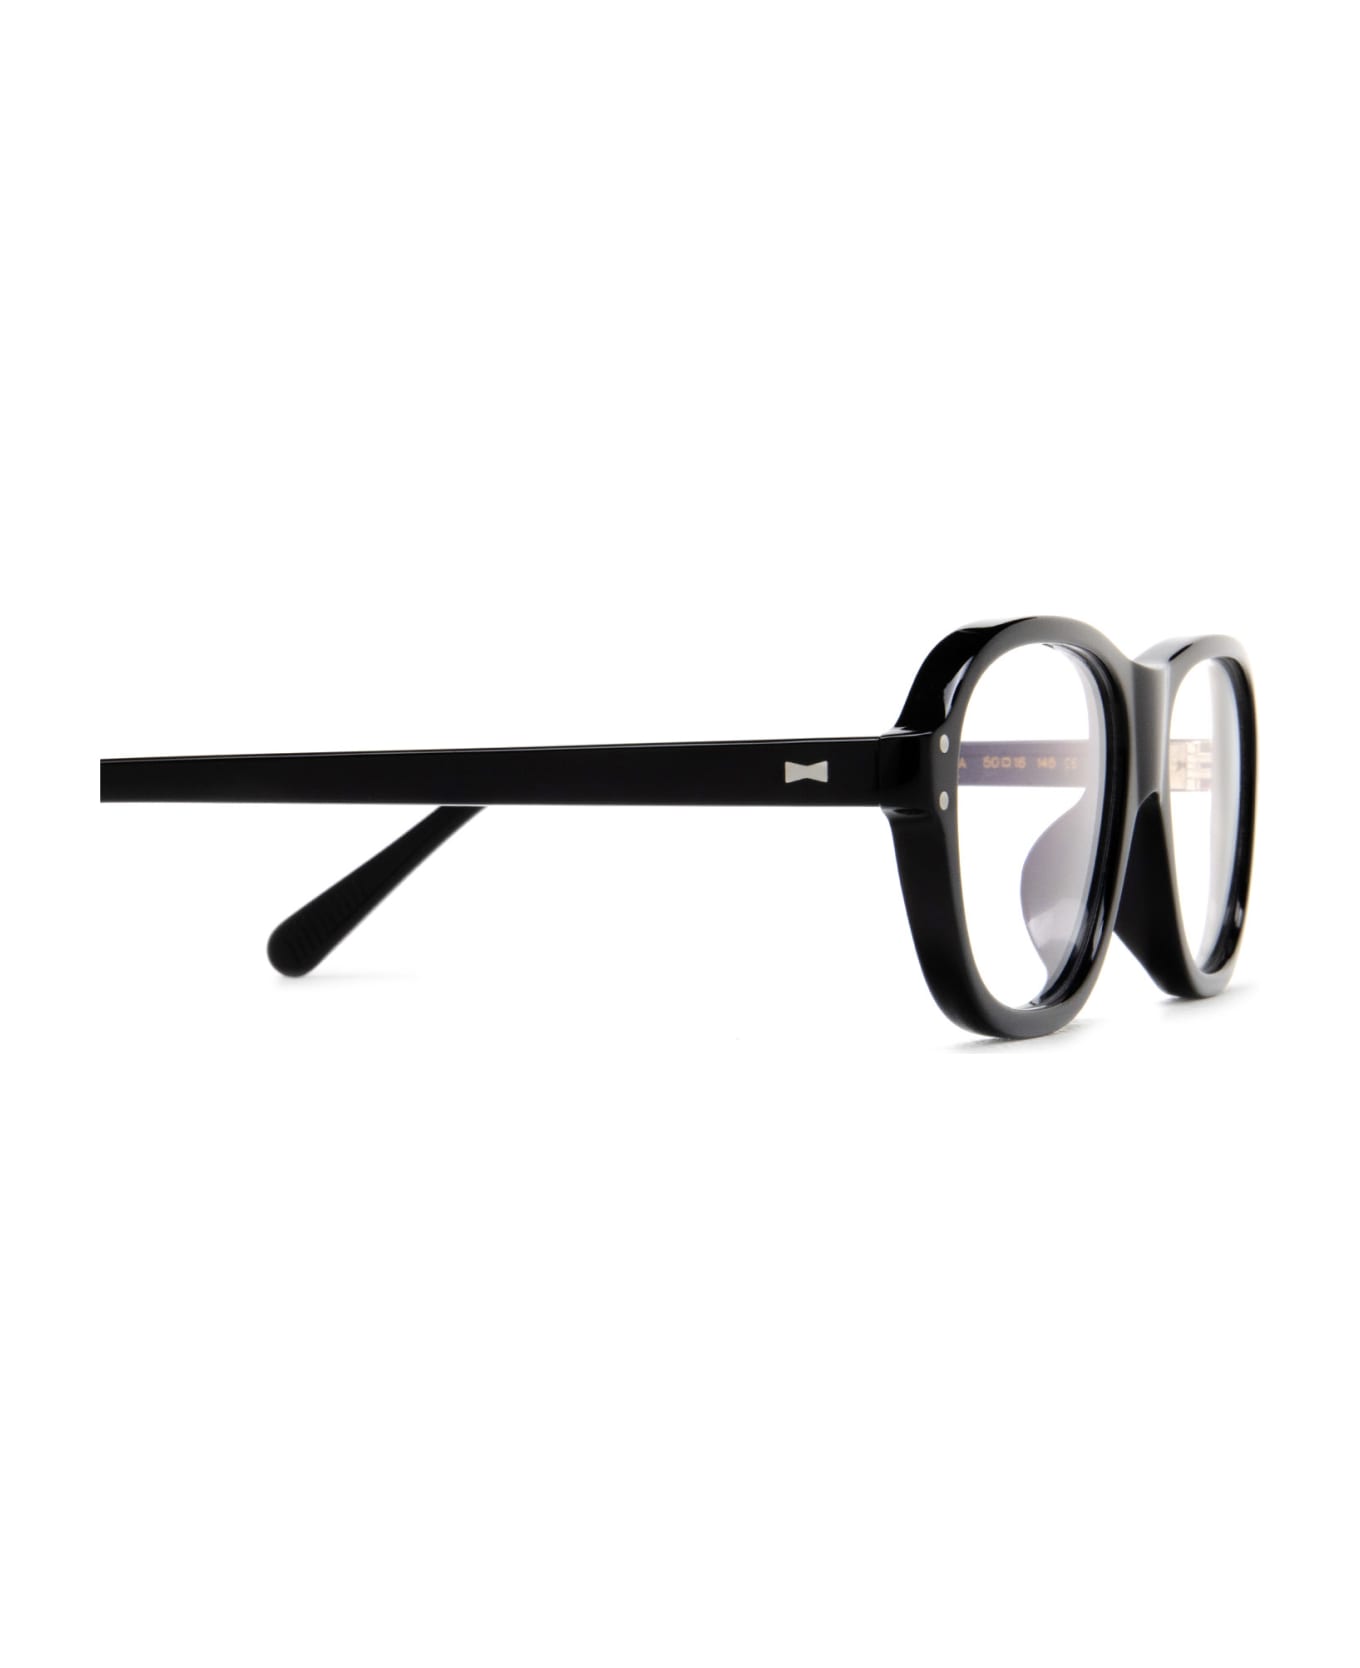 Cubitts Colonnade Black Glasses - Black アイウェア